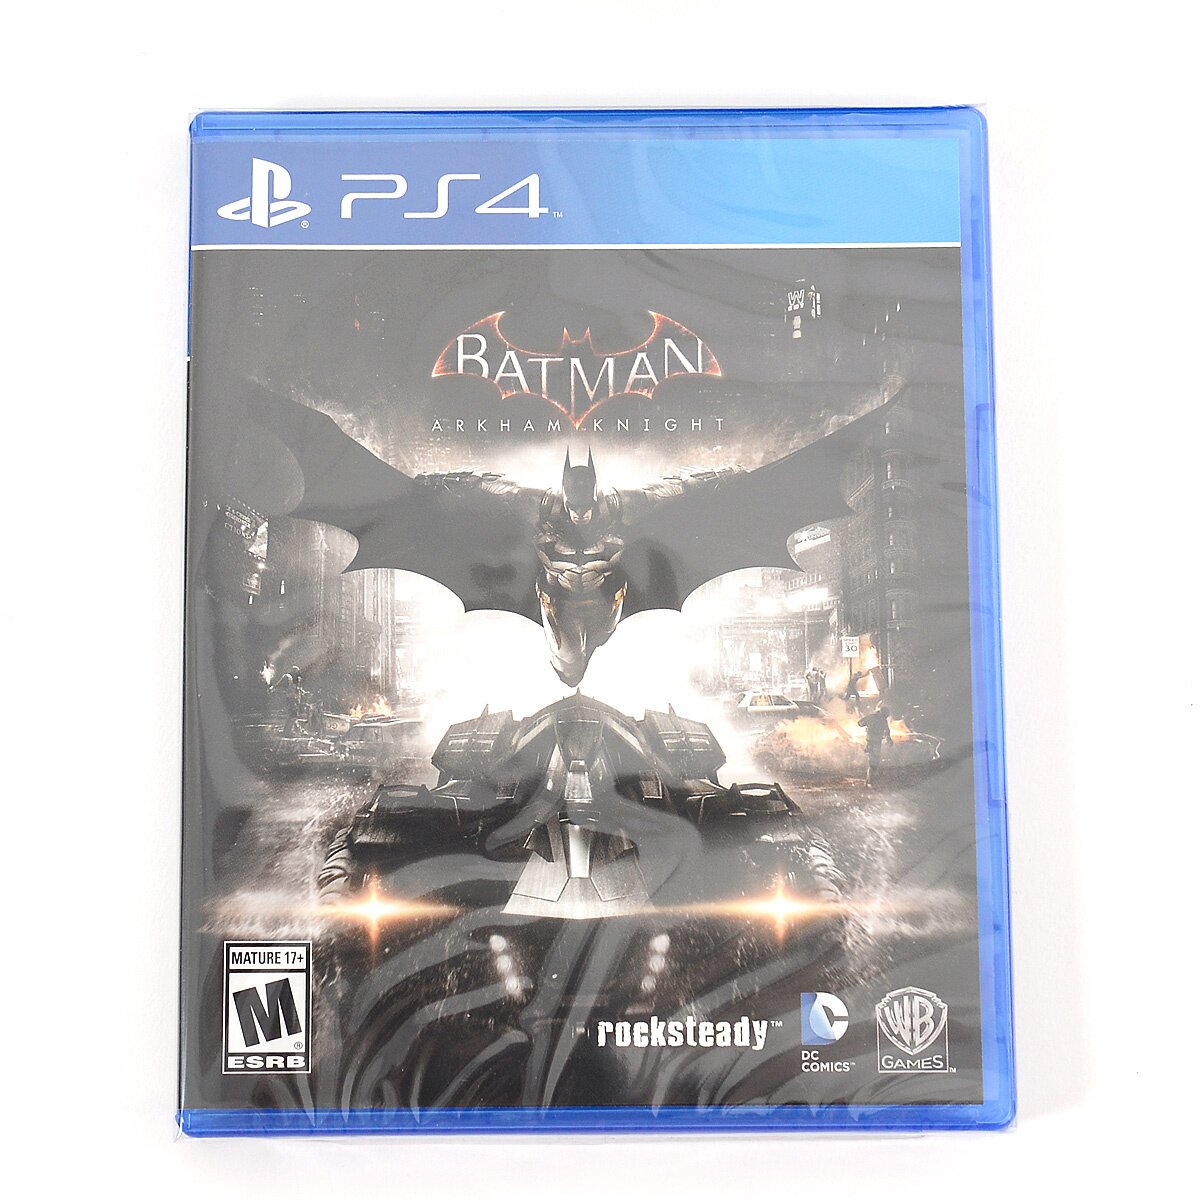 Batman: Arkham Knight Limited Edition (PS4)